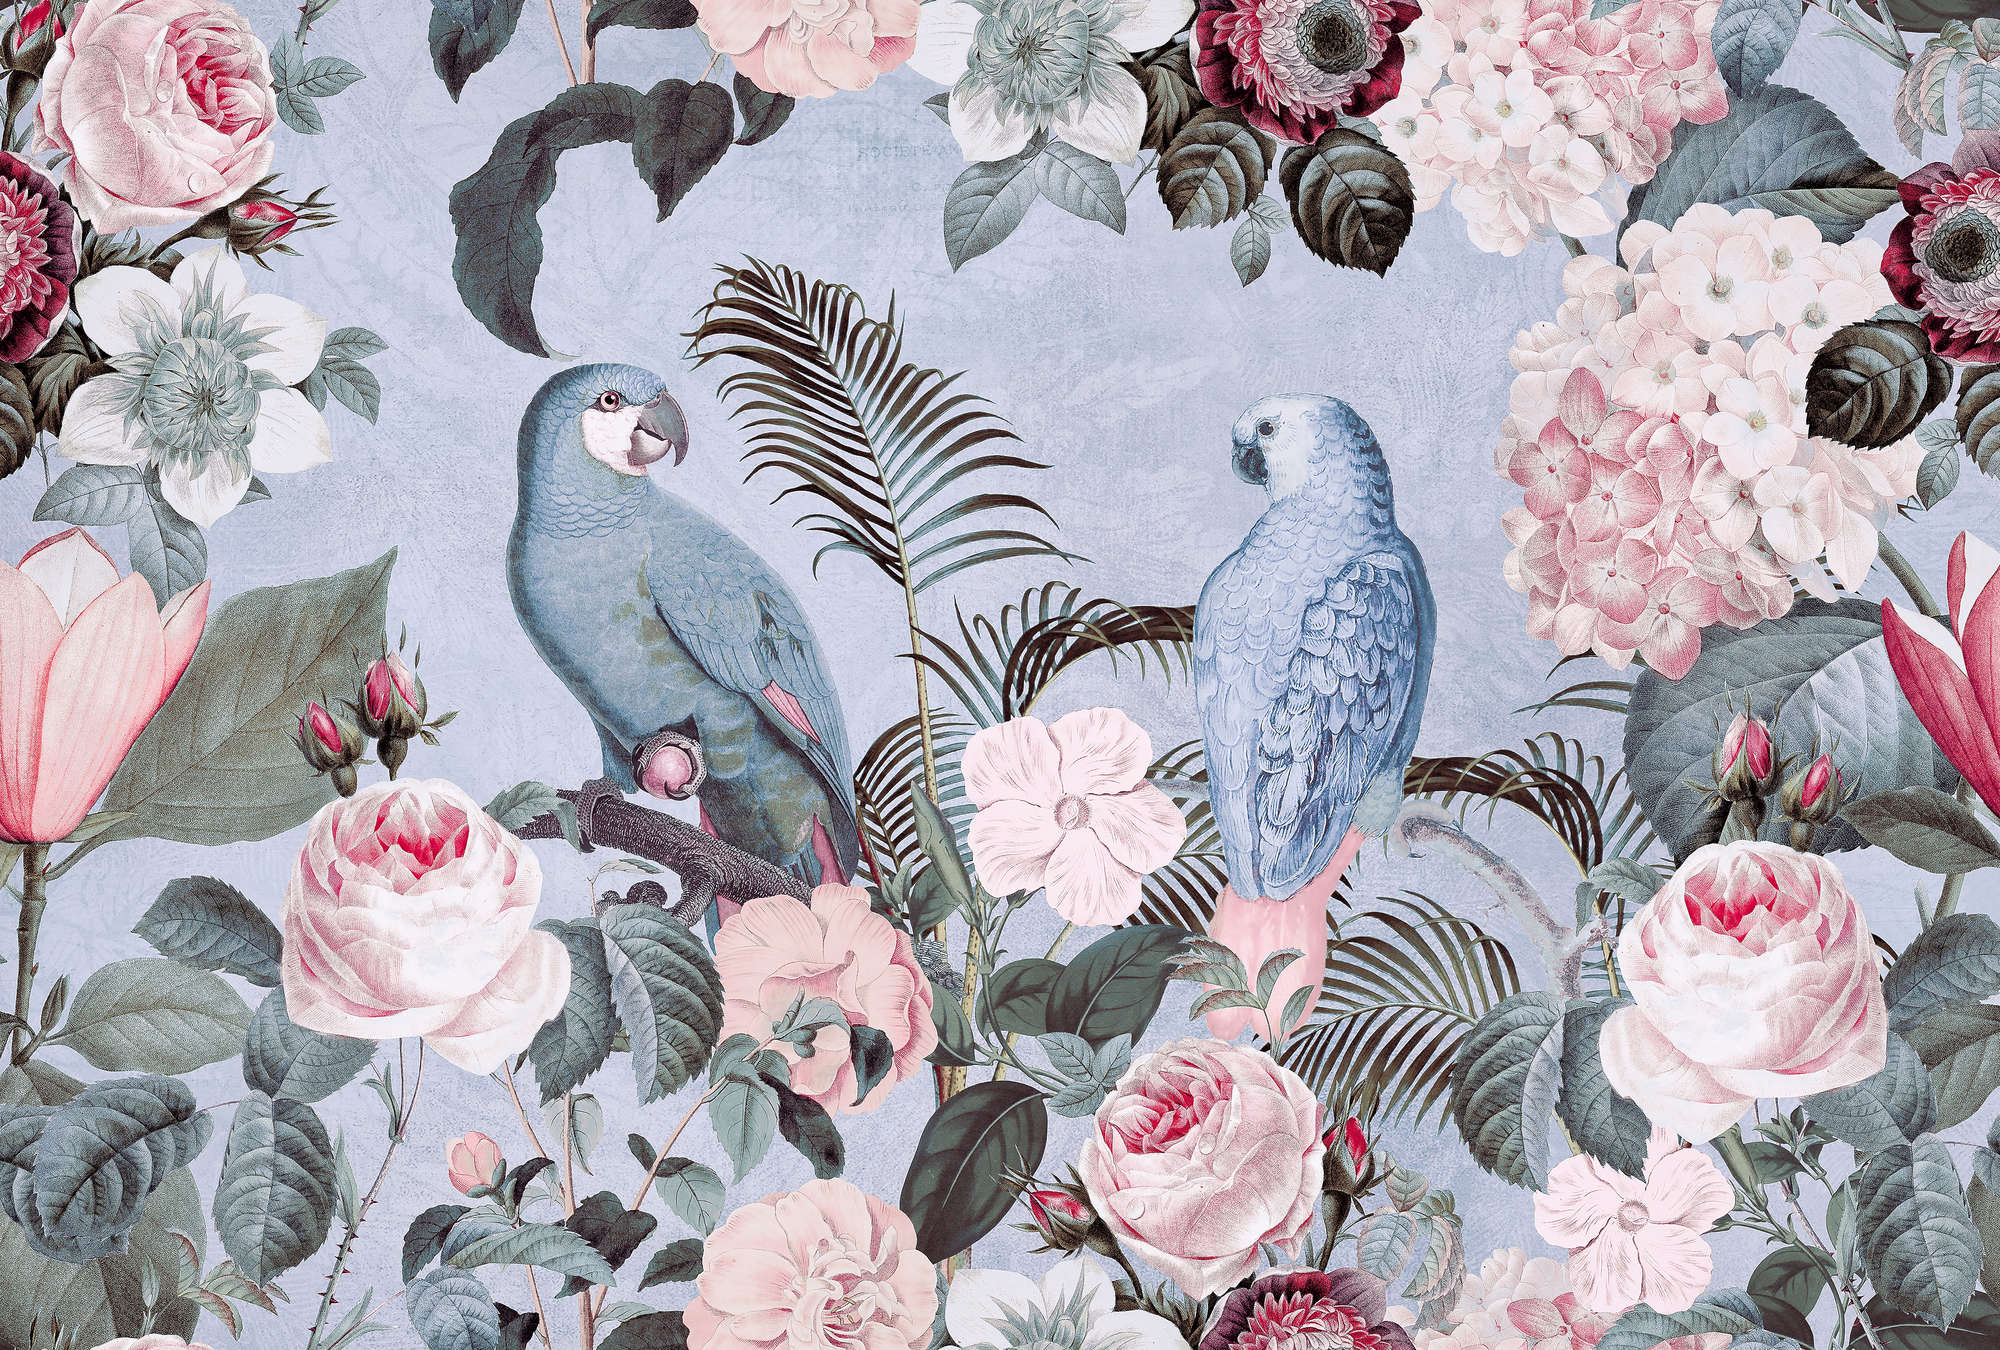             Fototapete Papageien Rendezvous mit Blumendesign – Blau
        